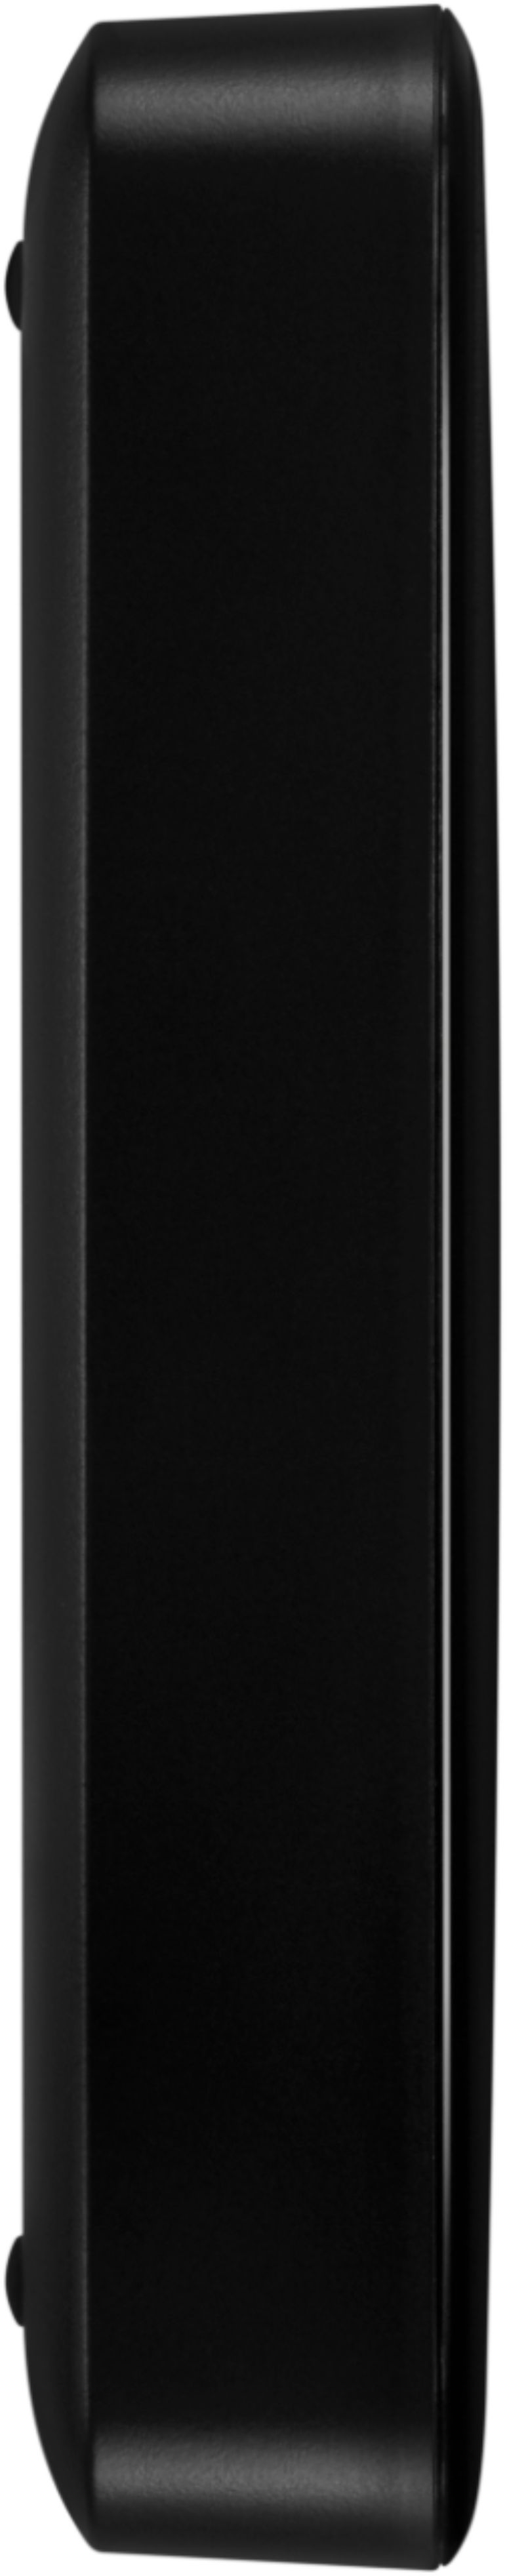 WD - easystore 5TB External USB 3.0 Portable Hard Drive - Black